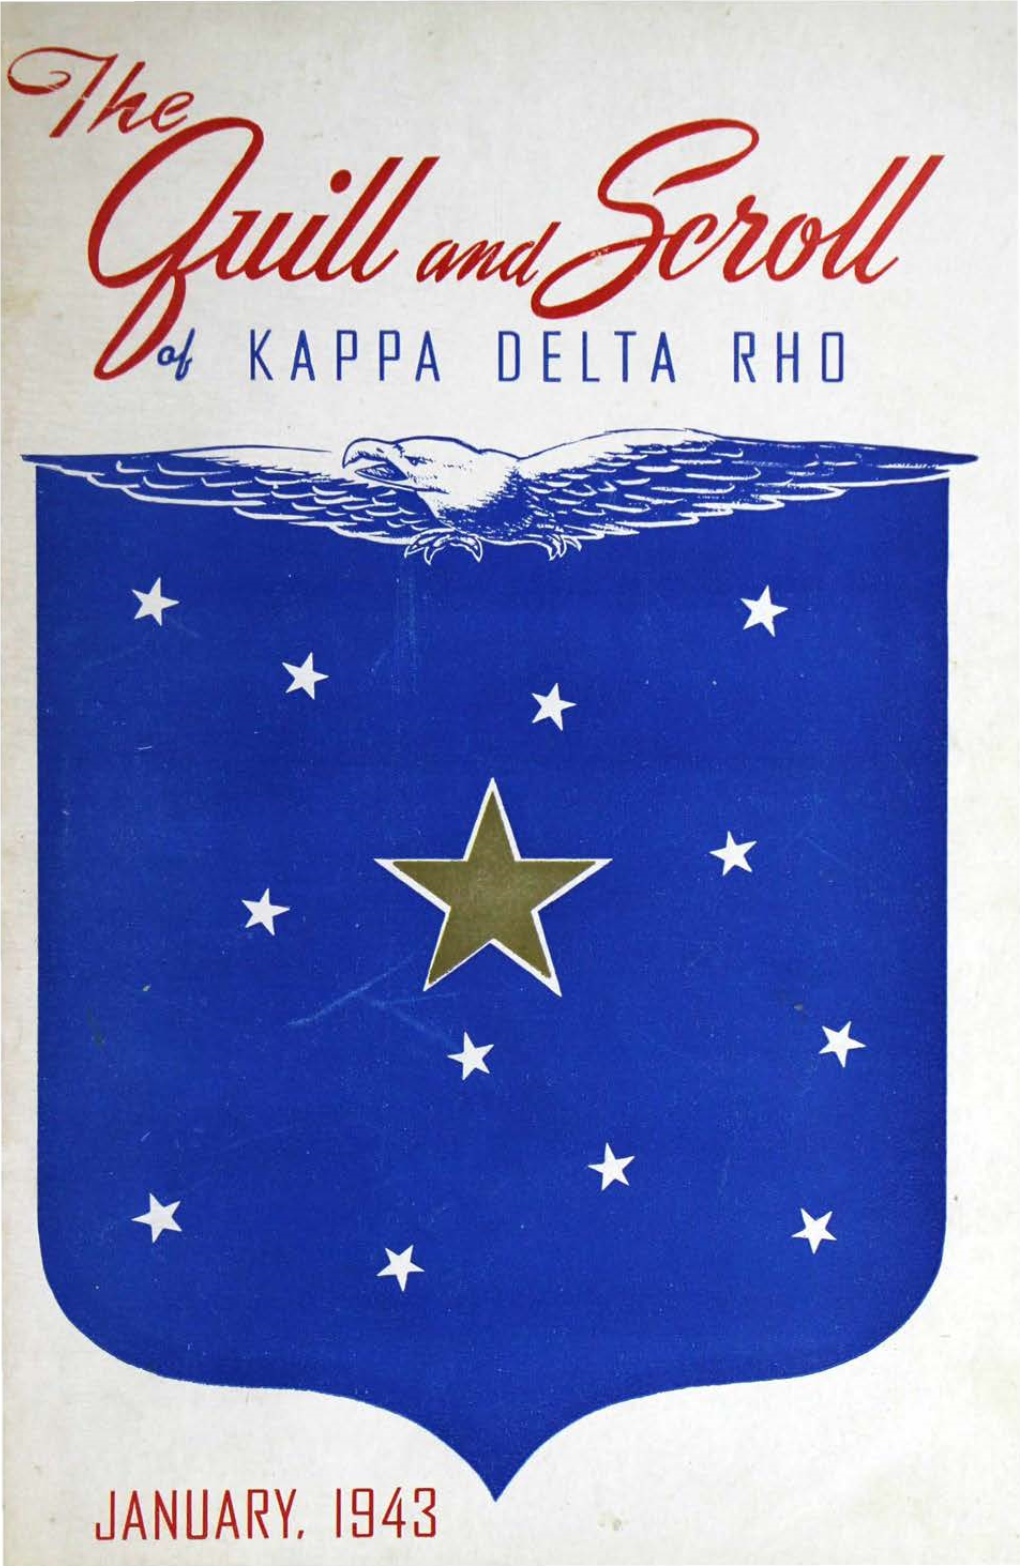 Kappa Delta Rho Archives